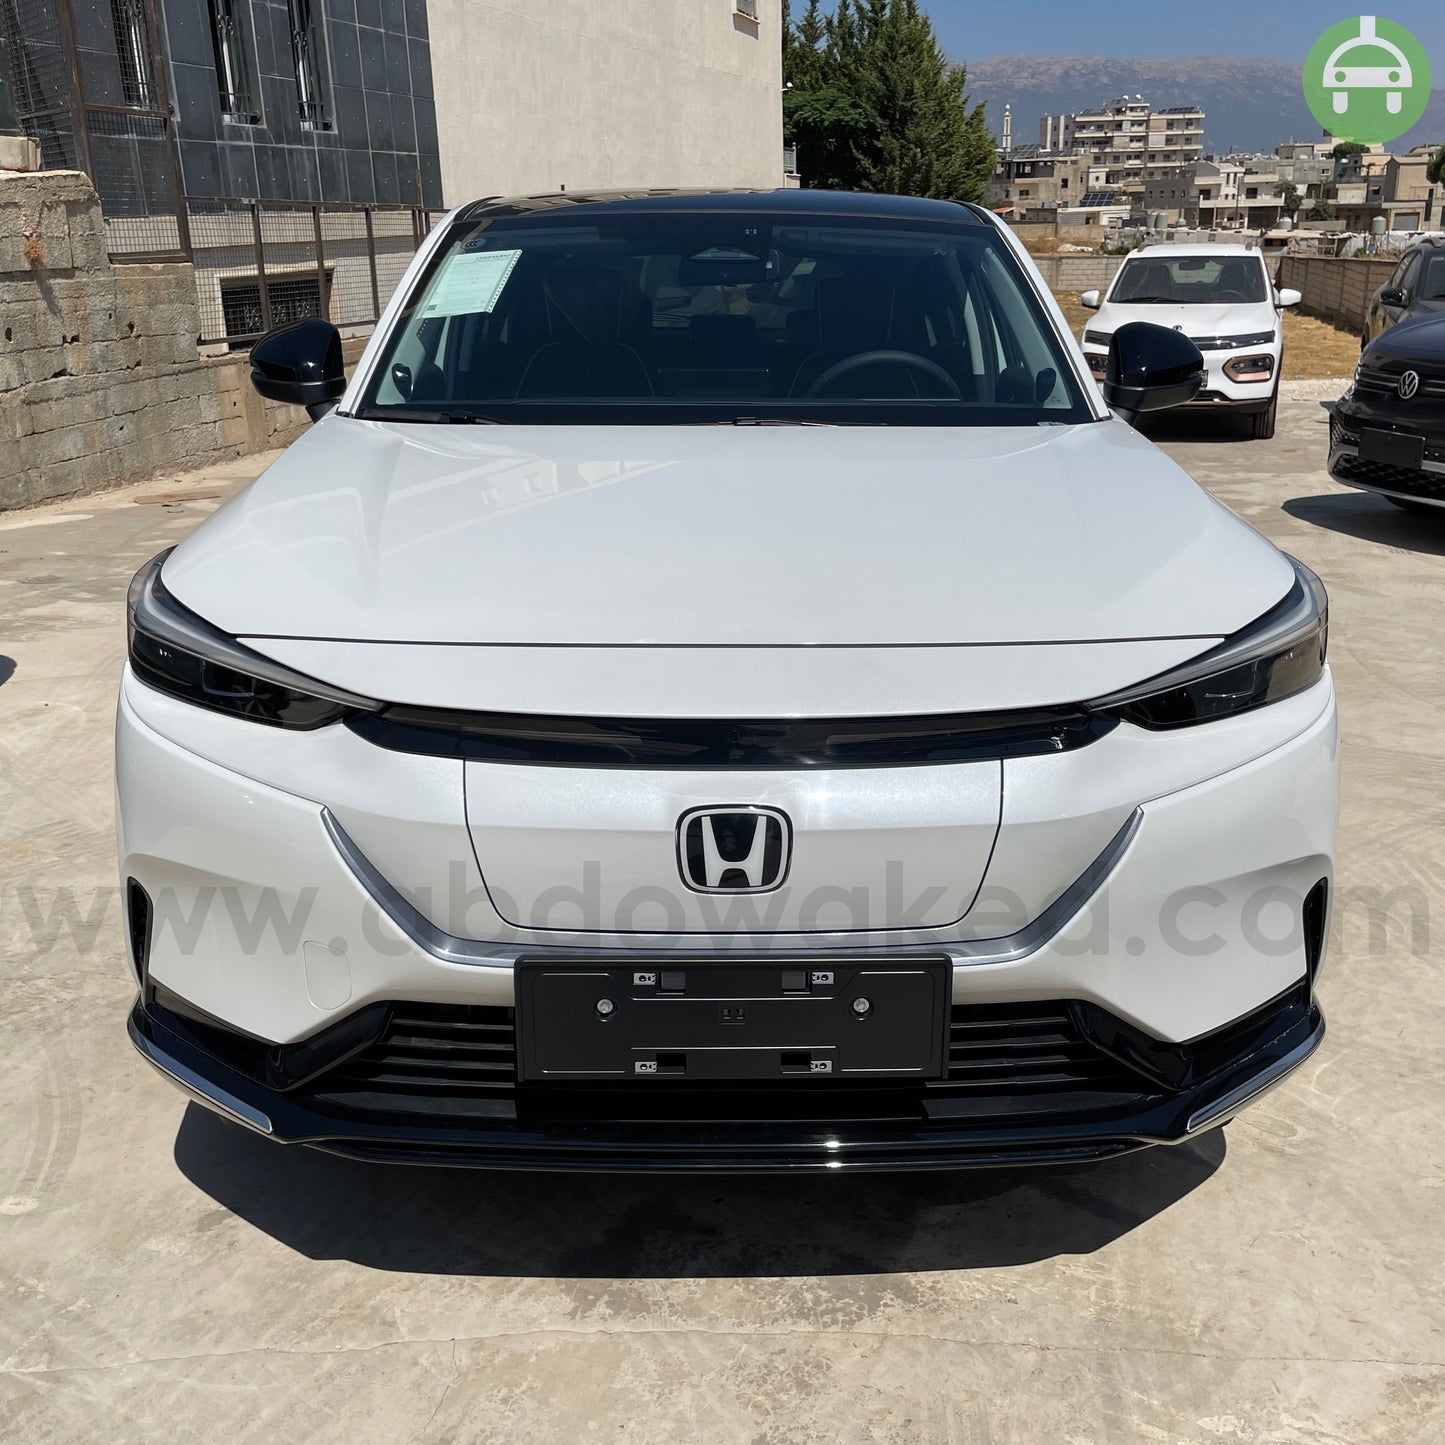 Honda E:NS1 2023 White Color 530km Range/Charge Fully Electric Car (New - 0KM)